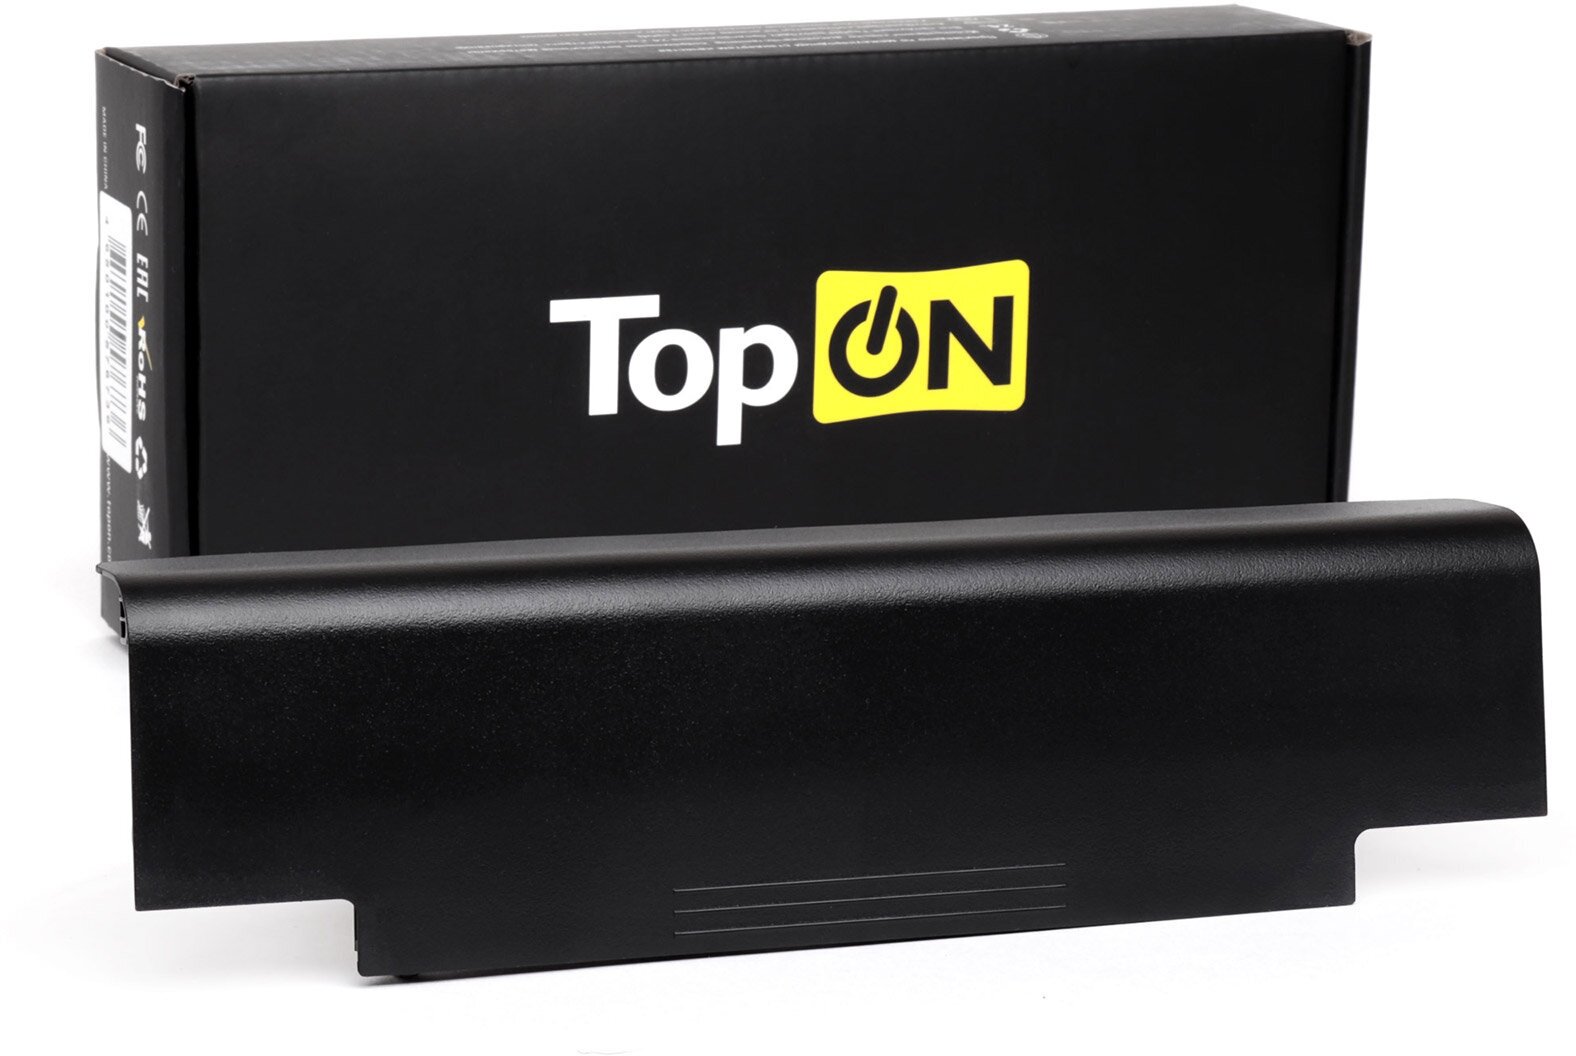 Аккумулятор TopON для ноутбуков Topon Dell Inspiron 15R, 17R, M501, N3010, Vostro 3450 Series. 11.1V 4400mAh 49Wh. PN: J1KND, 07XFJJ.